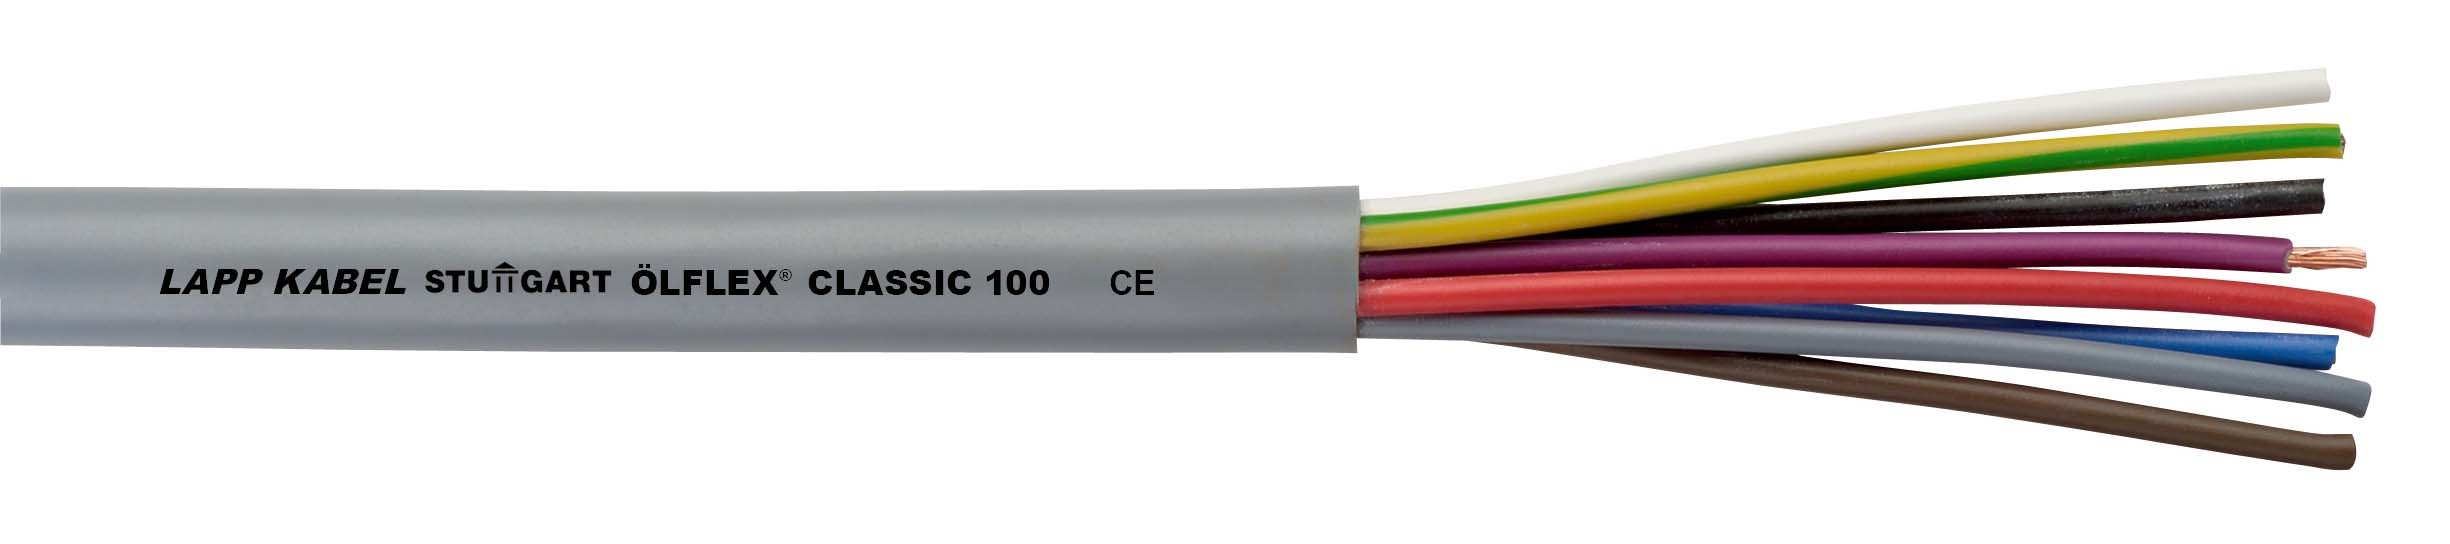 ÖLFLEX CLASSIC 100 5G4 00101023 T500 